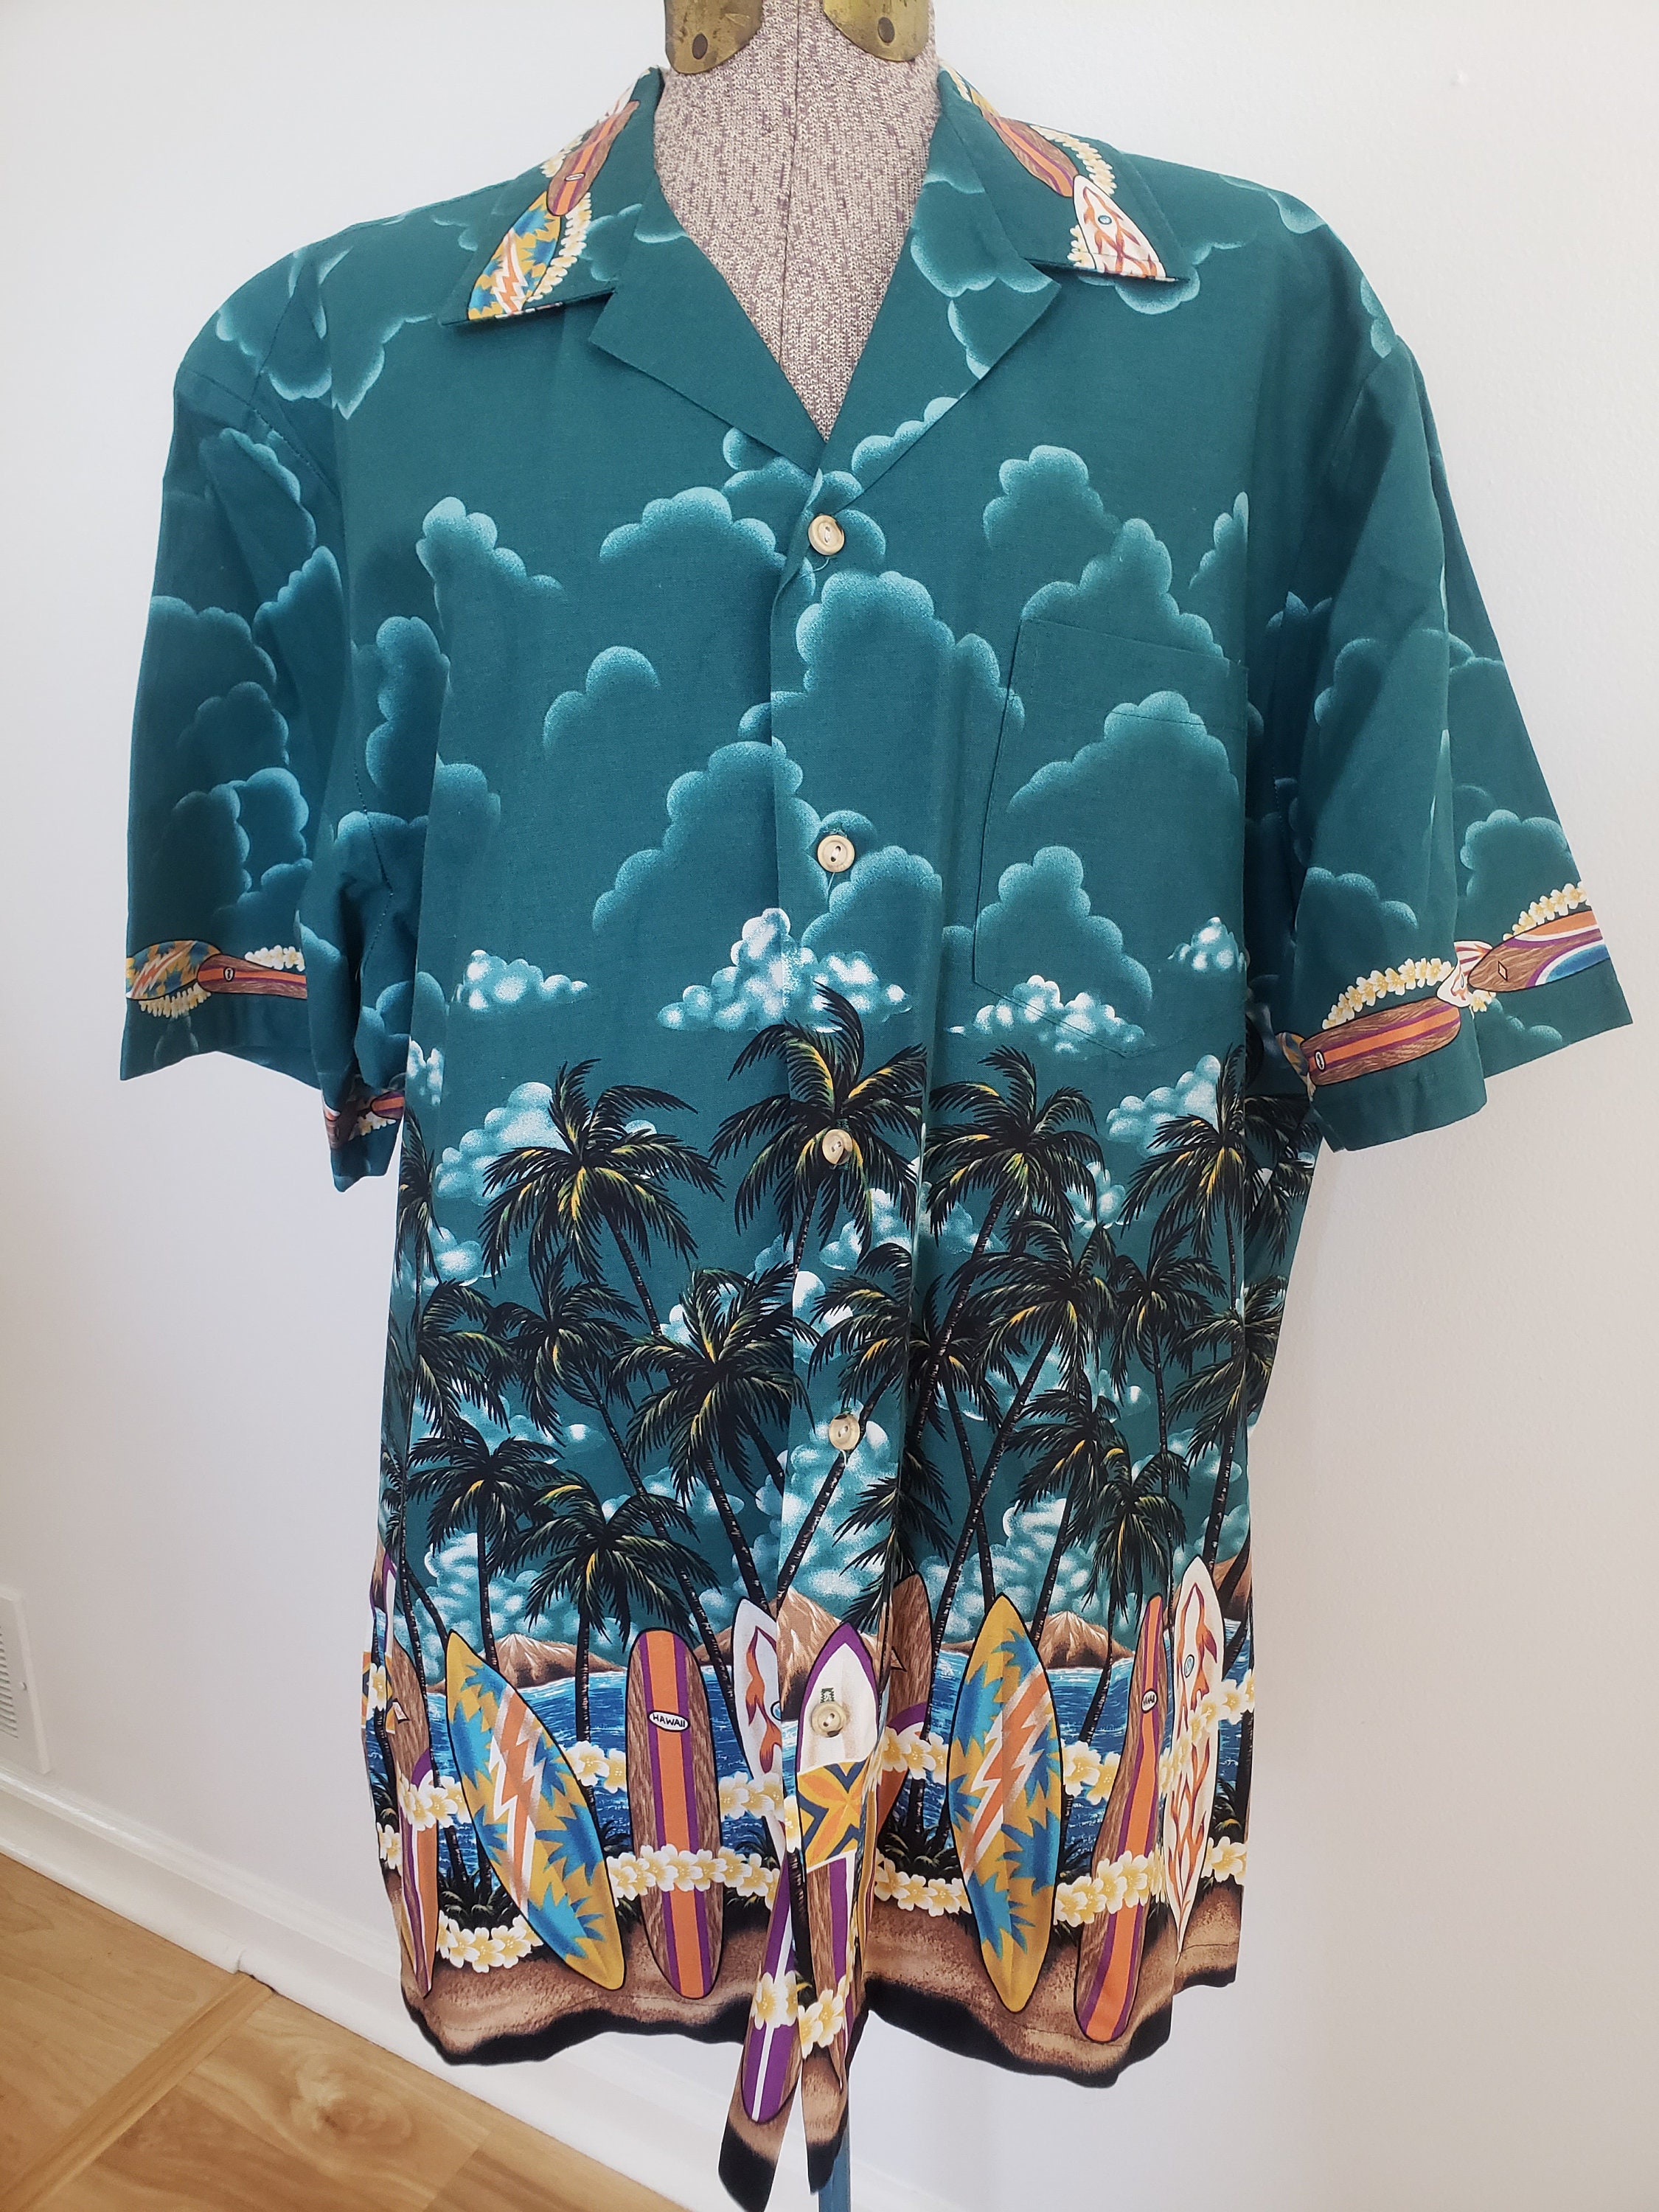 Vintage Styled by RJC LTD - Retro Classic Summer Resortwear Beach Bum Style Clothing Cool Surfer Fashion Surf Island Print Hawaiian Shirt